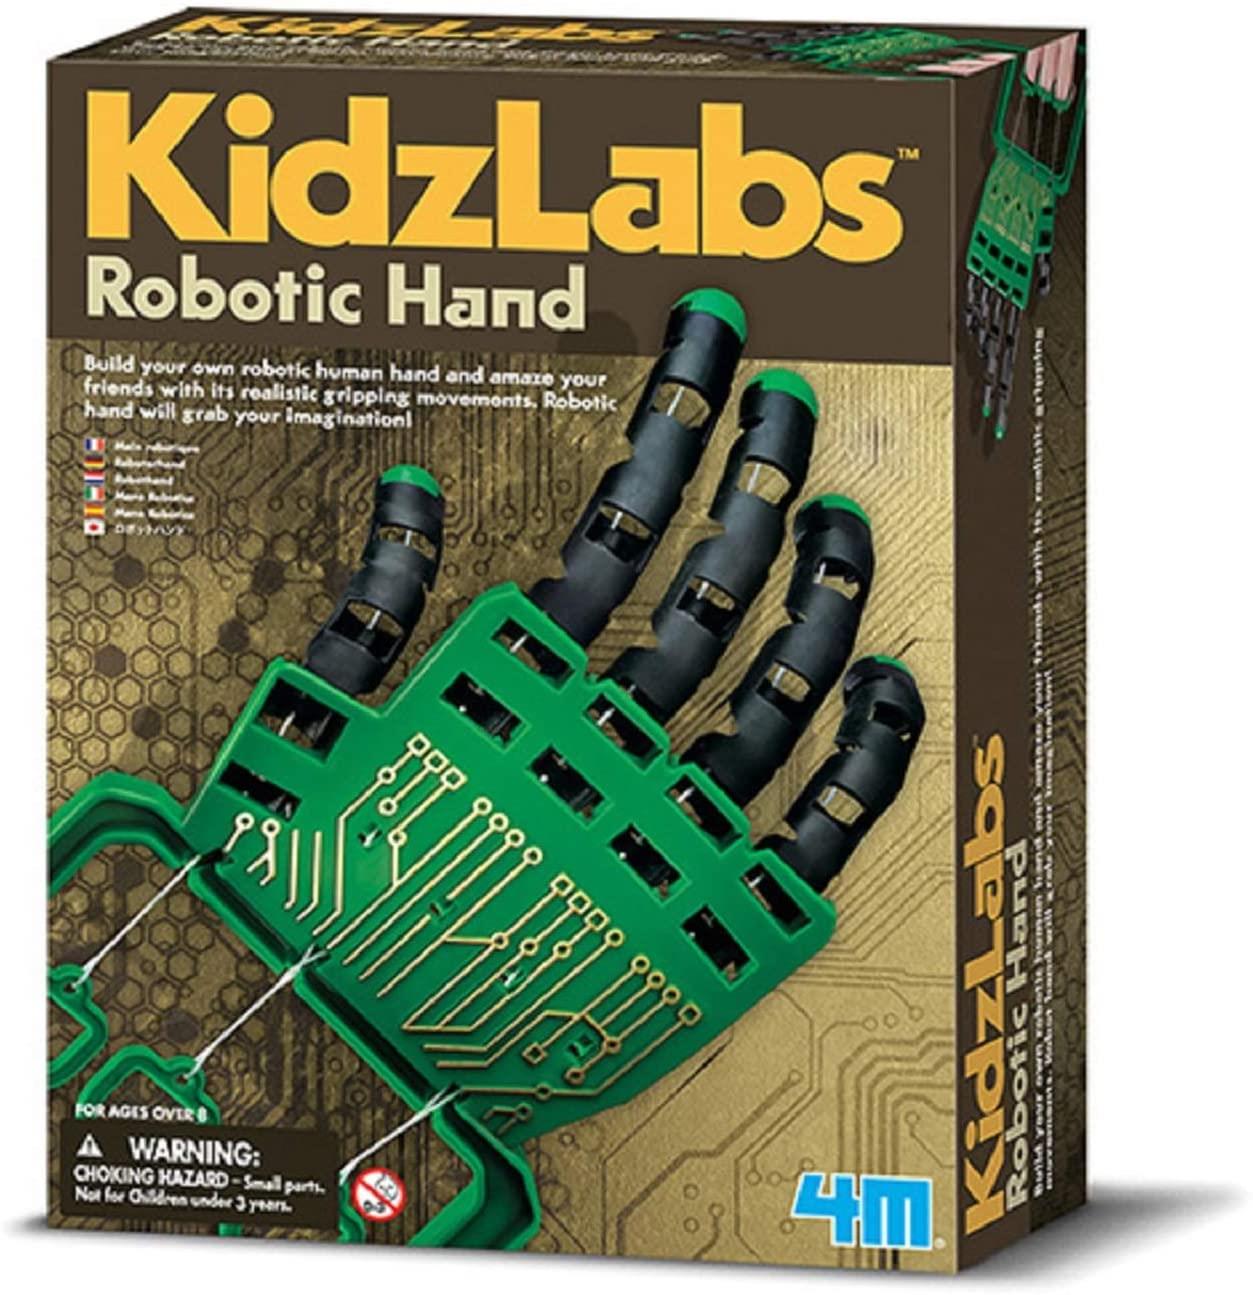 Great Gizmos 4M KidzLabs Robotic Hand